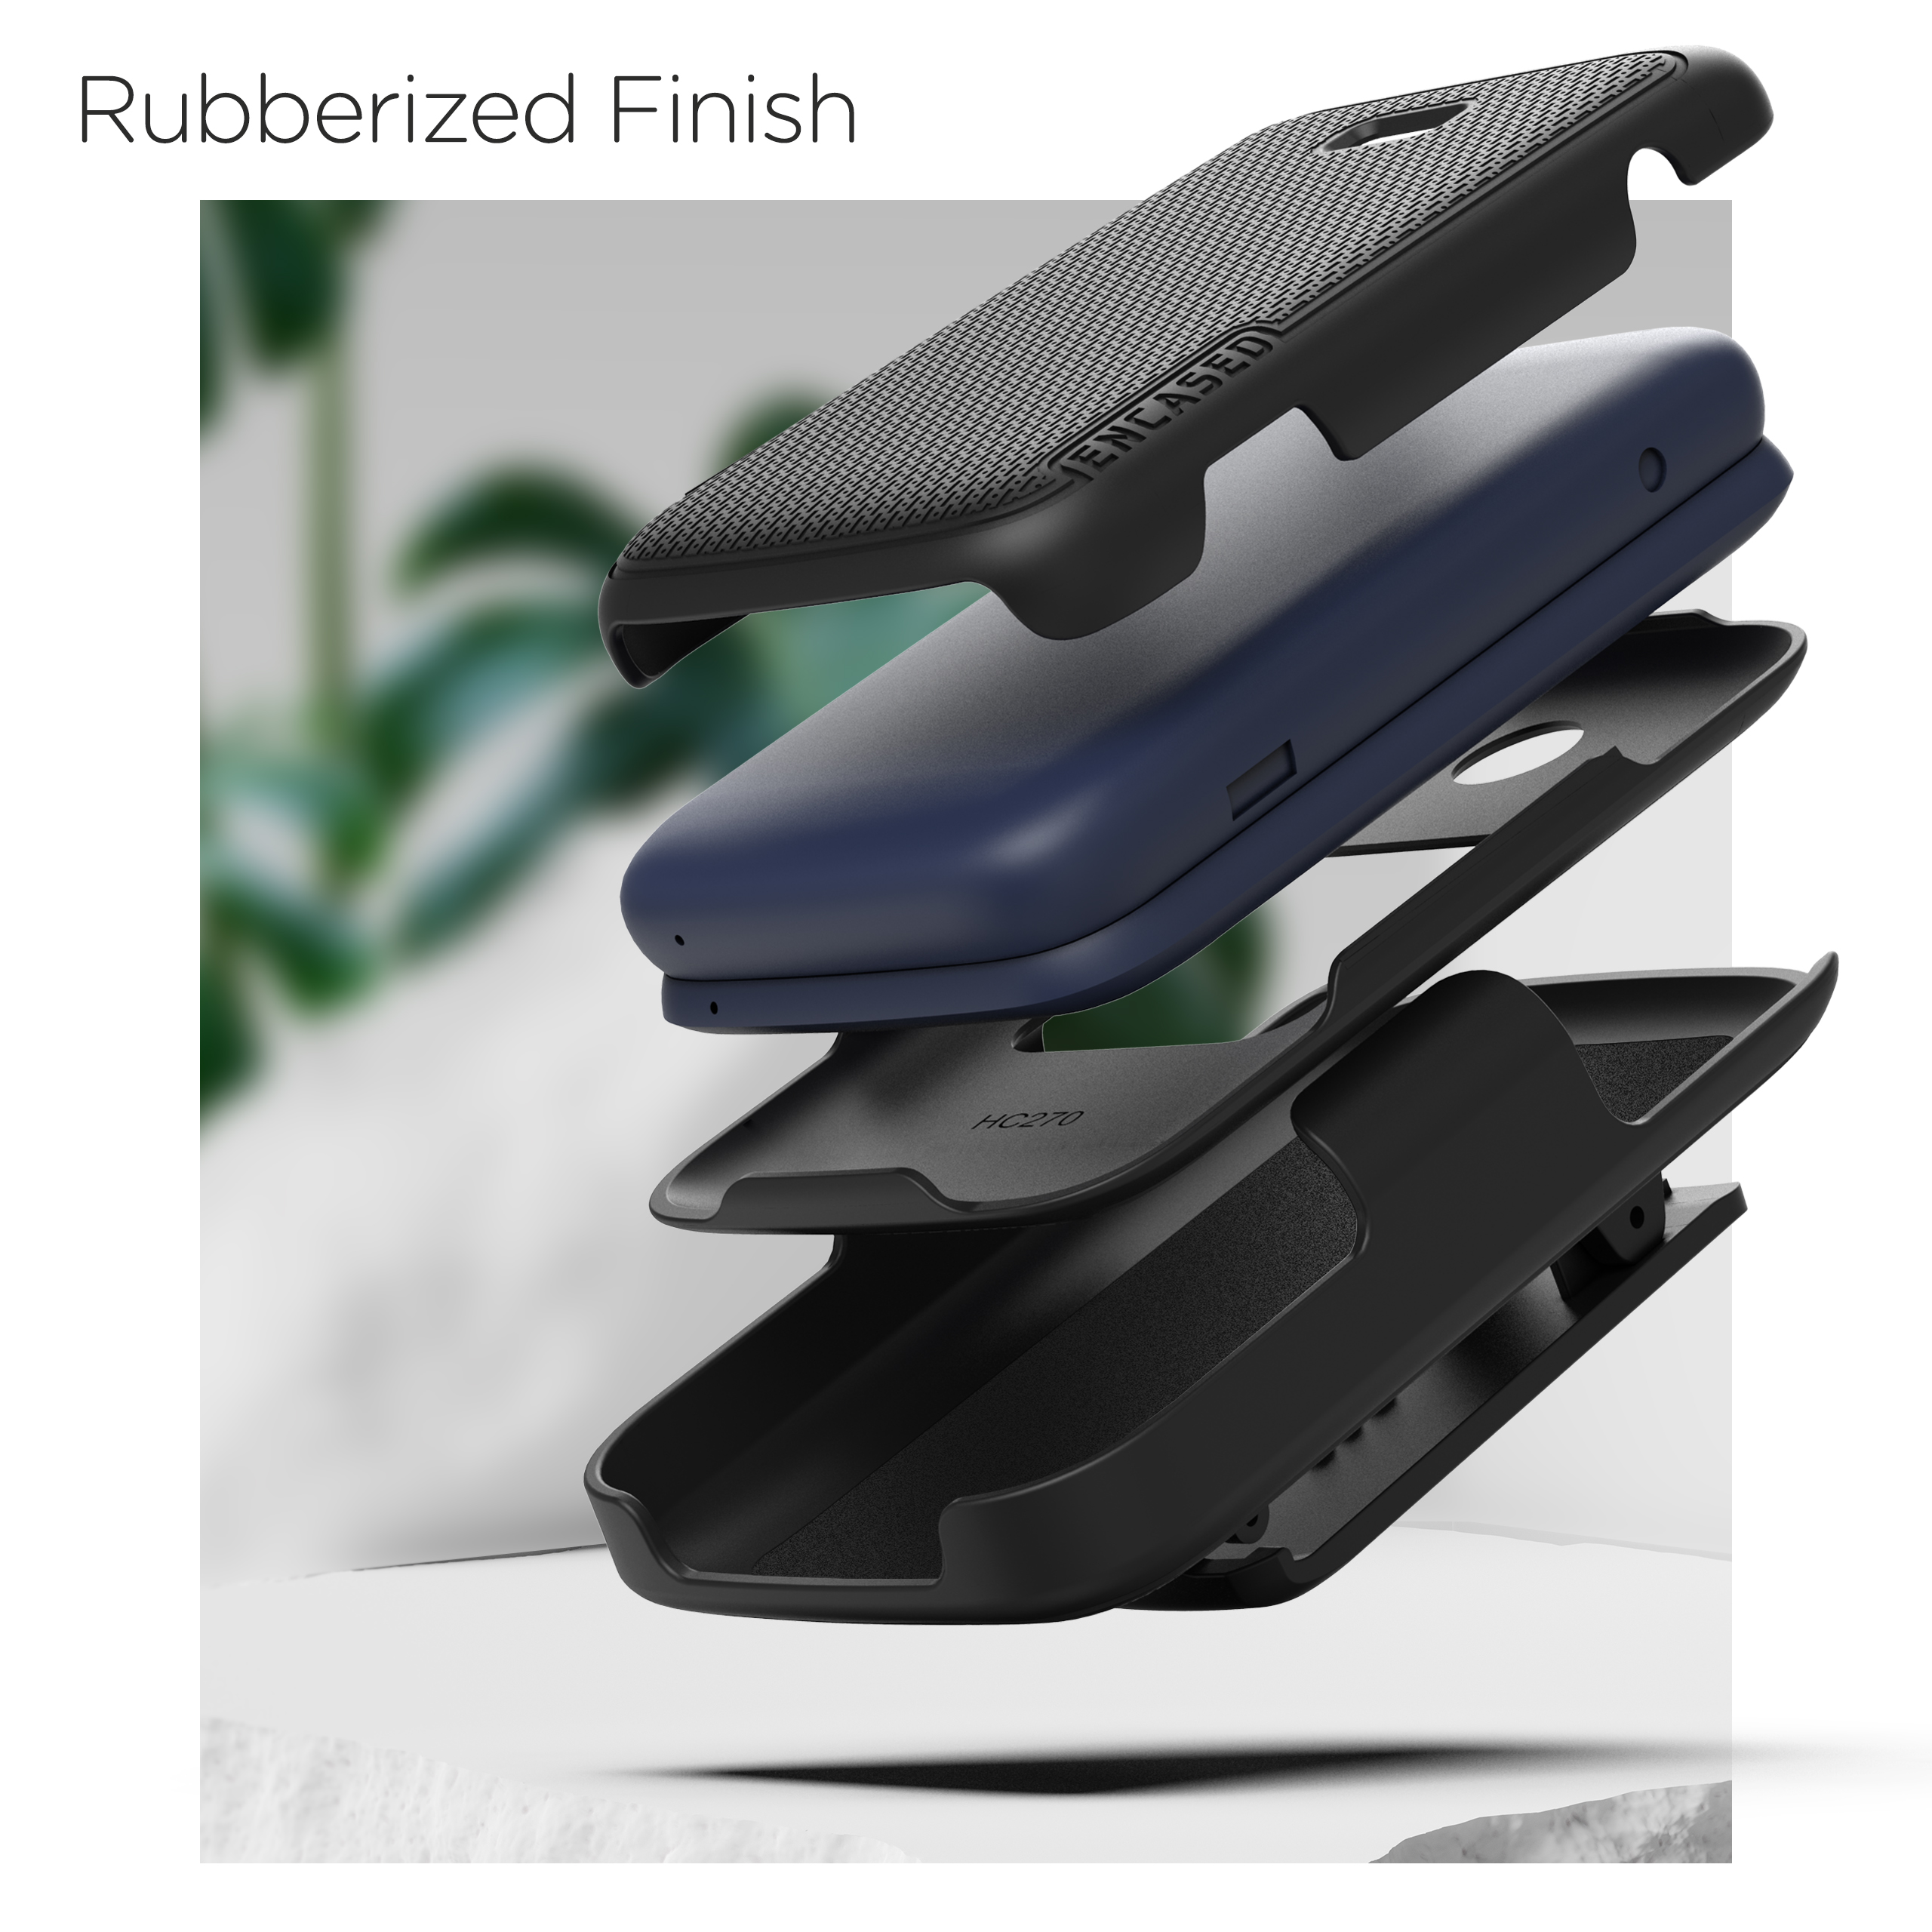  Universal Flip Phone Case with Belt Loop Clip, Shoulder/Crossbody  Strap, Zipper Wallet, Great for Alcatel Go Flip V, Cingular Flip 2, MyFlip,  Quickflip, K9570 : Cell Phones & Accessories